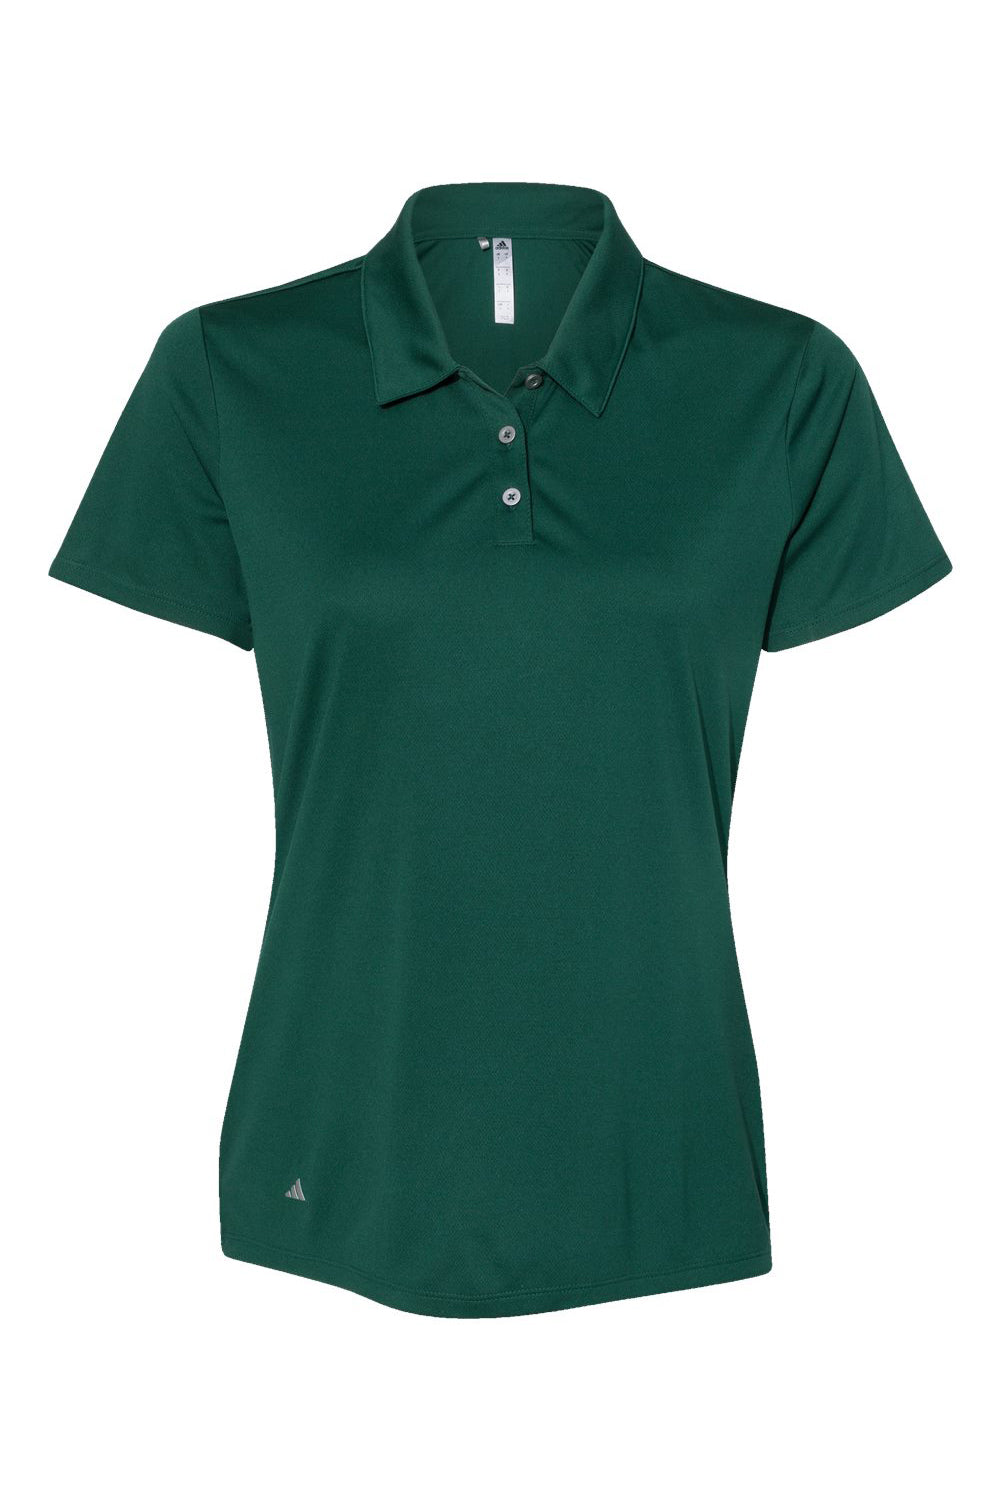 Adidas A231 Womens Performance UPF 50+ Short Sleeve Polo Shirt Collegiate Green Flat Front